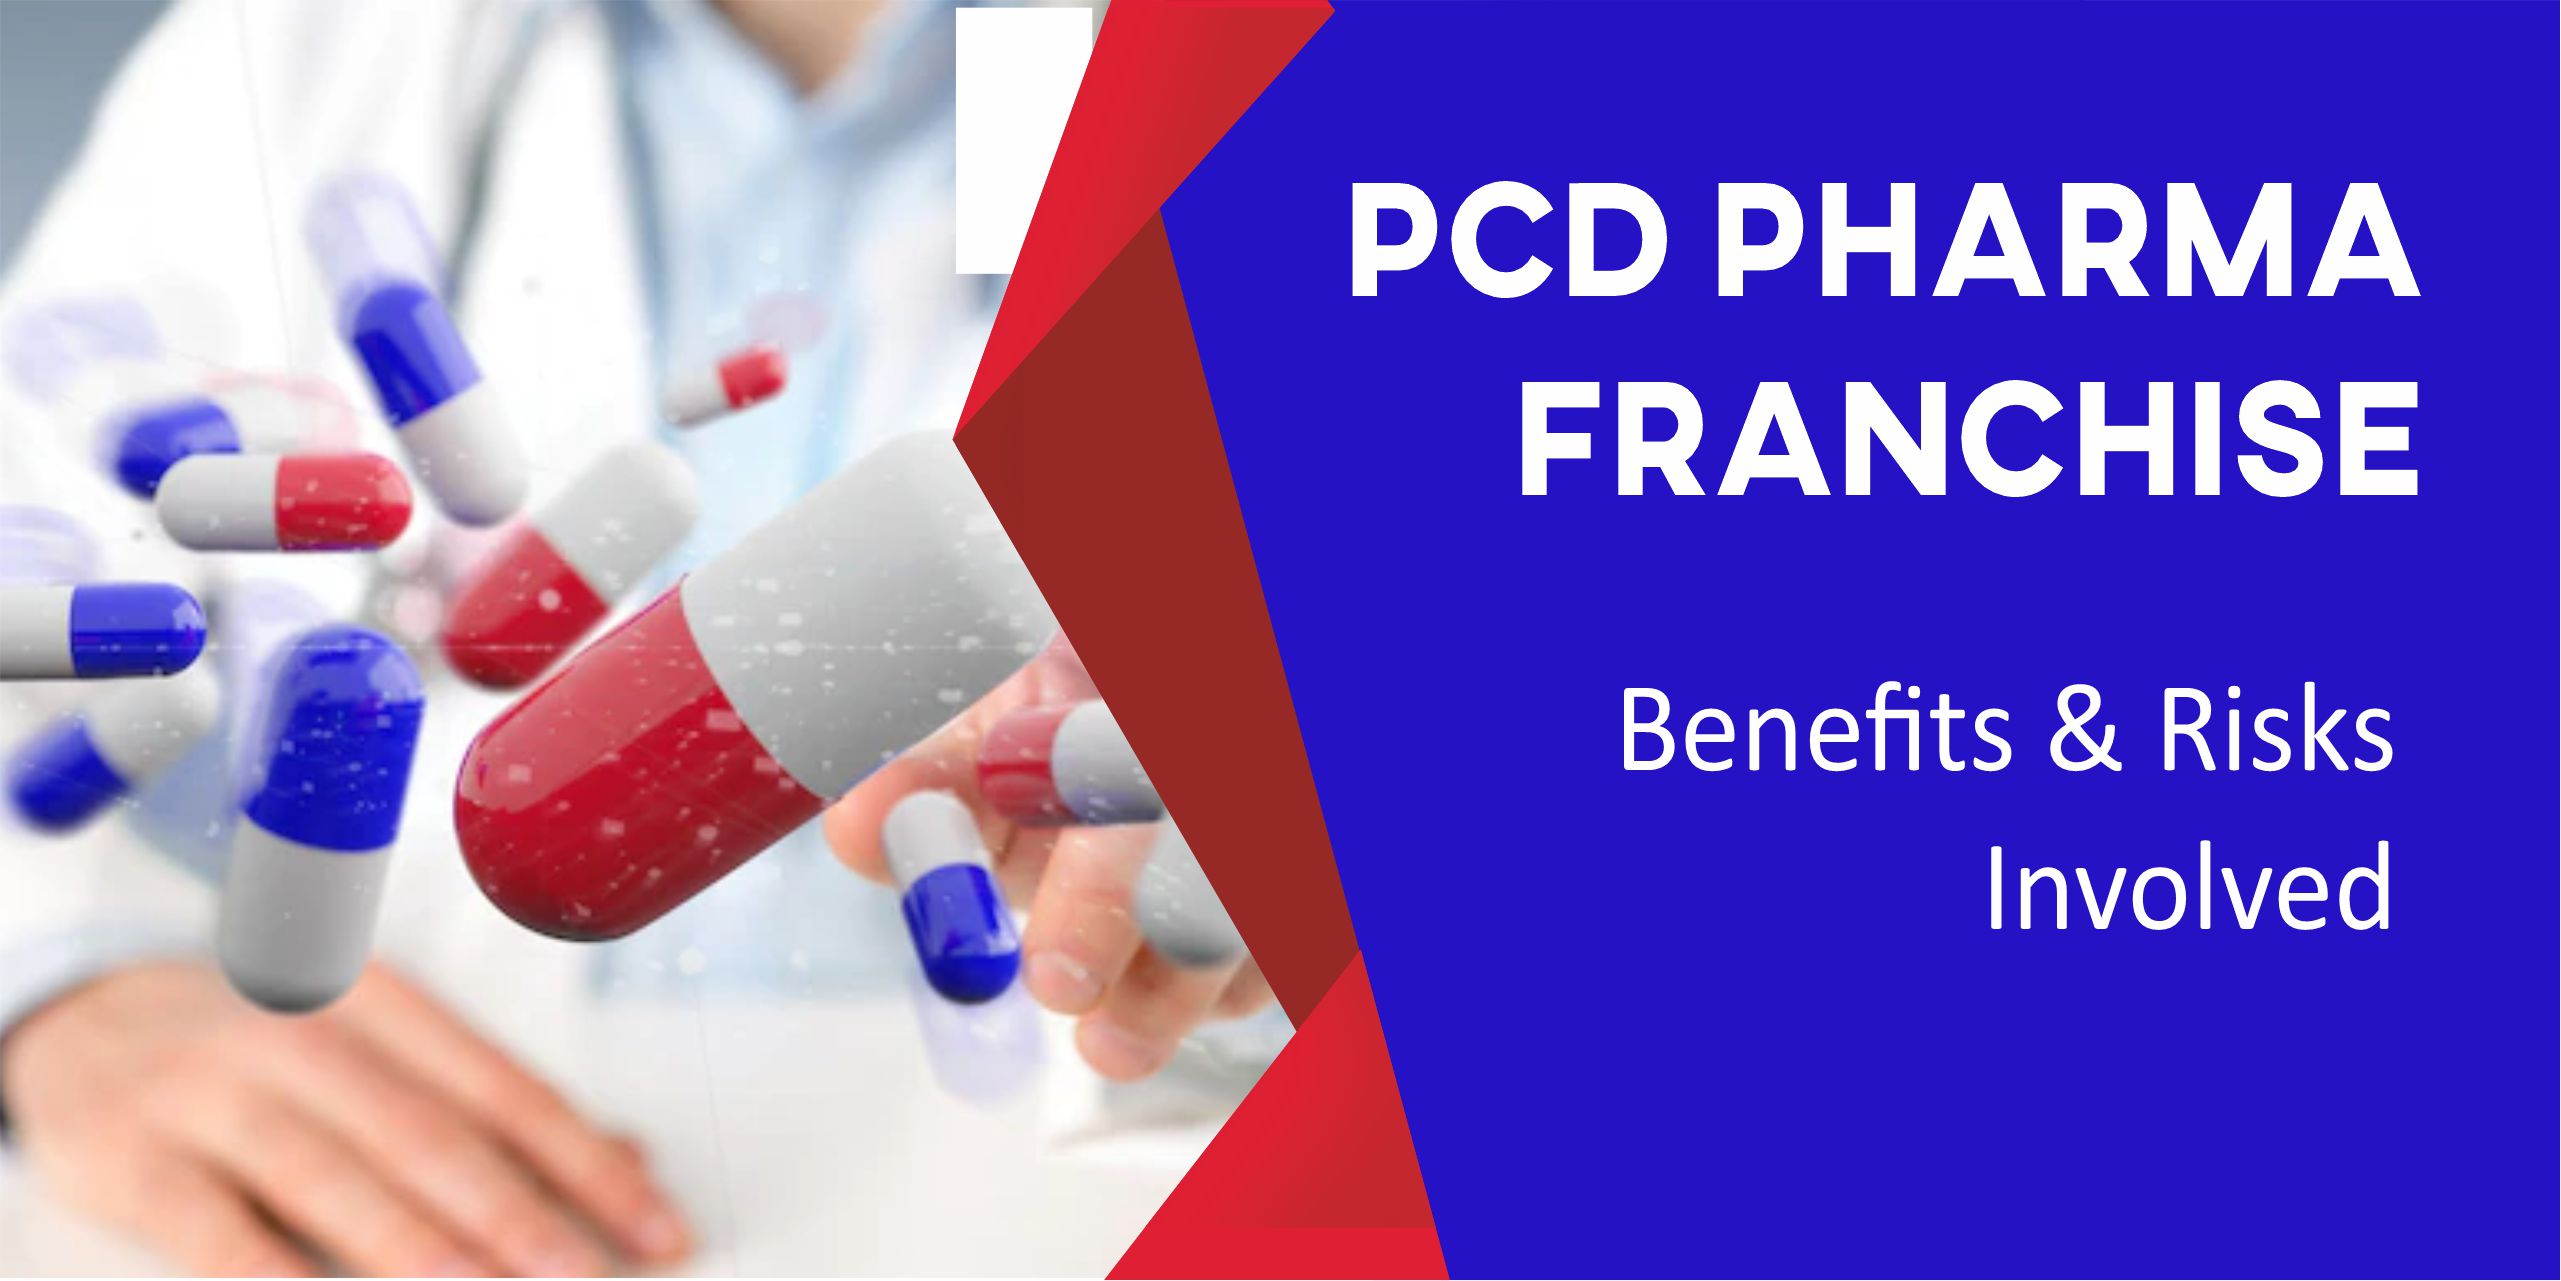 PCD Pharma Franchise in india